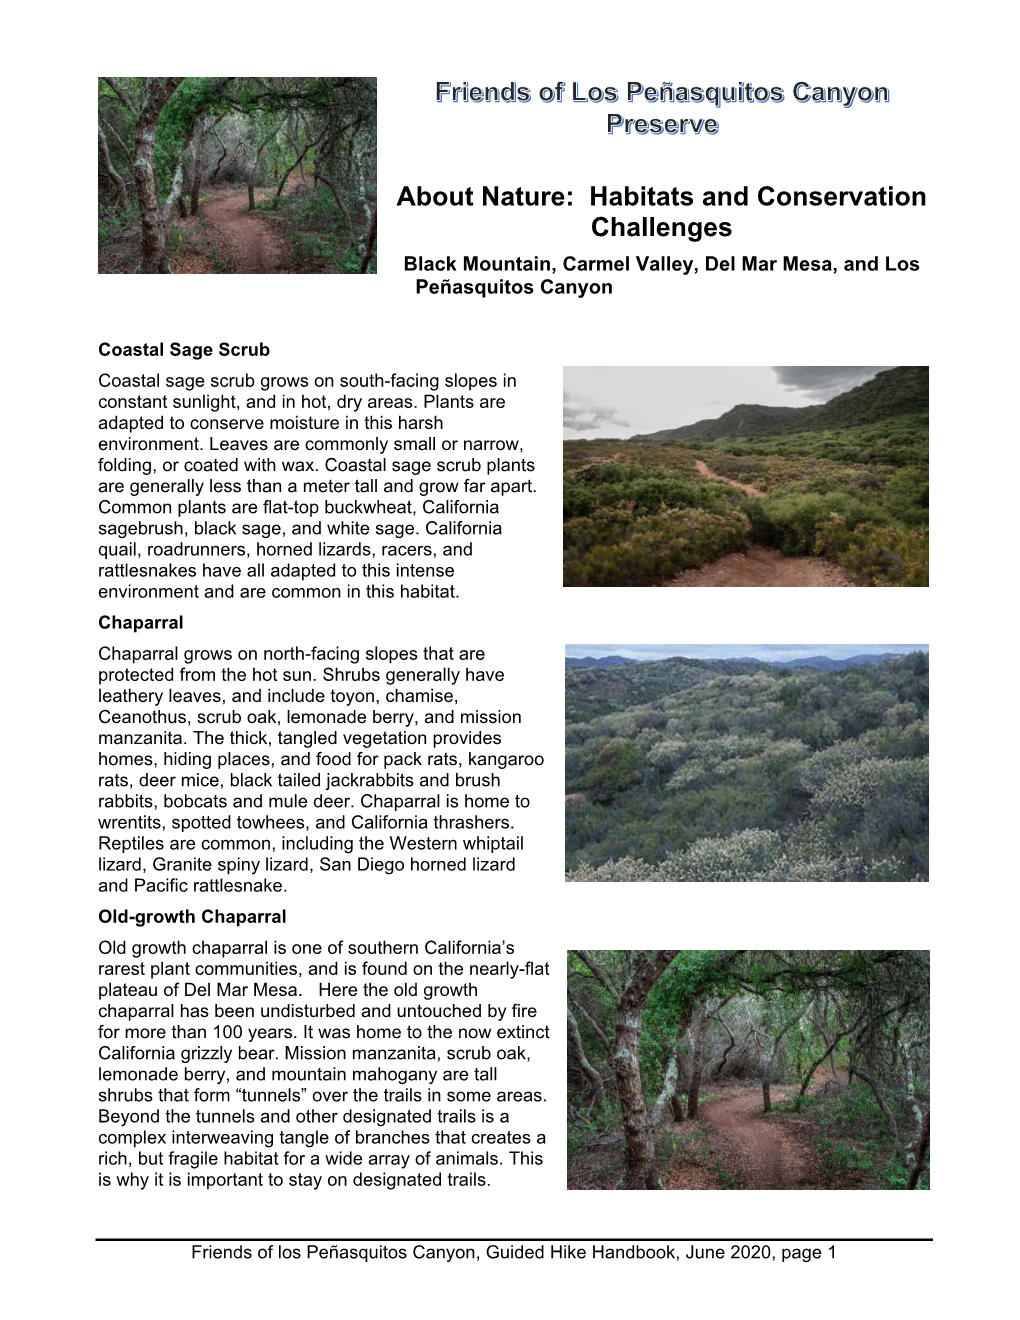 Habitats and Conservation Challenges Black Mountain, Carmel Valley, Del Mar Mesa, and Los Peñasquitos Canyon